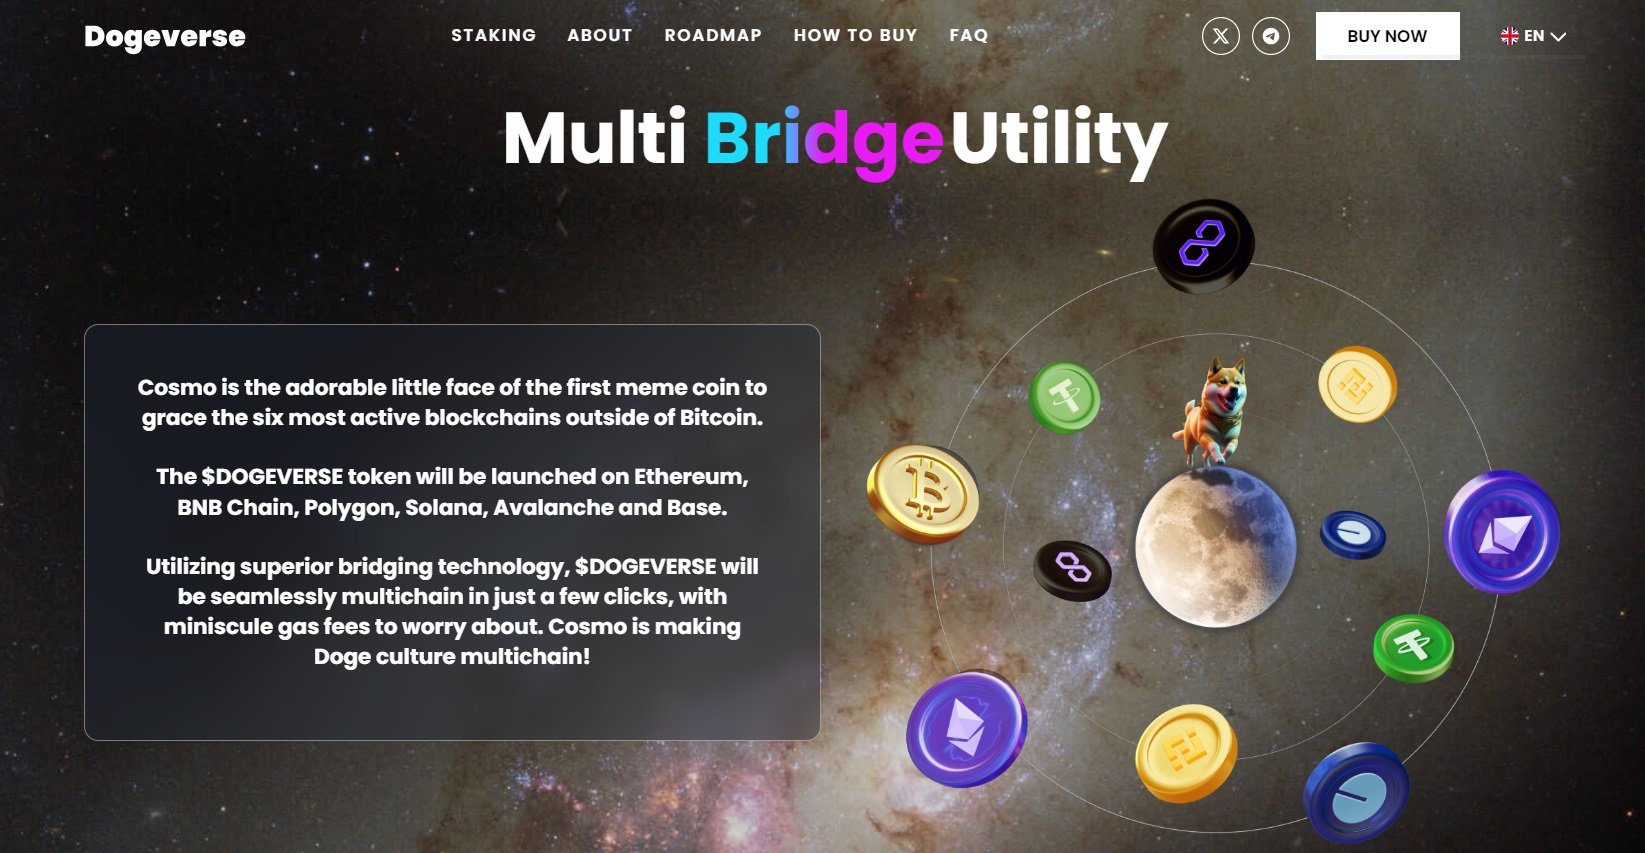 Dogeverse - multibridge utility